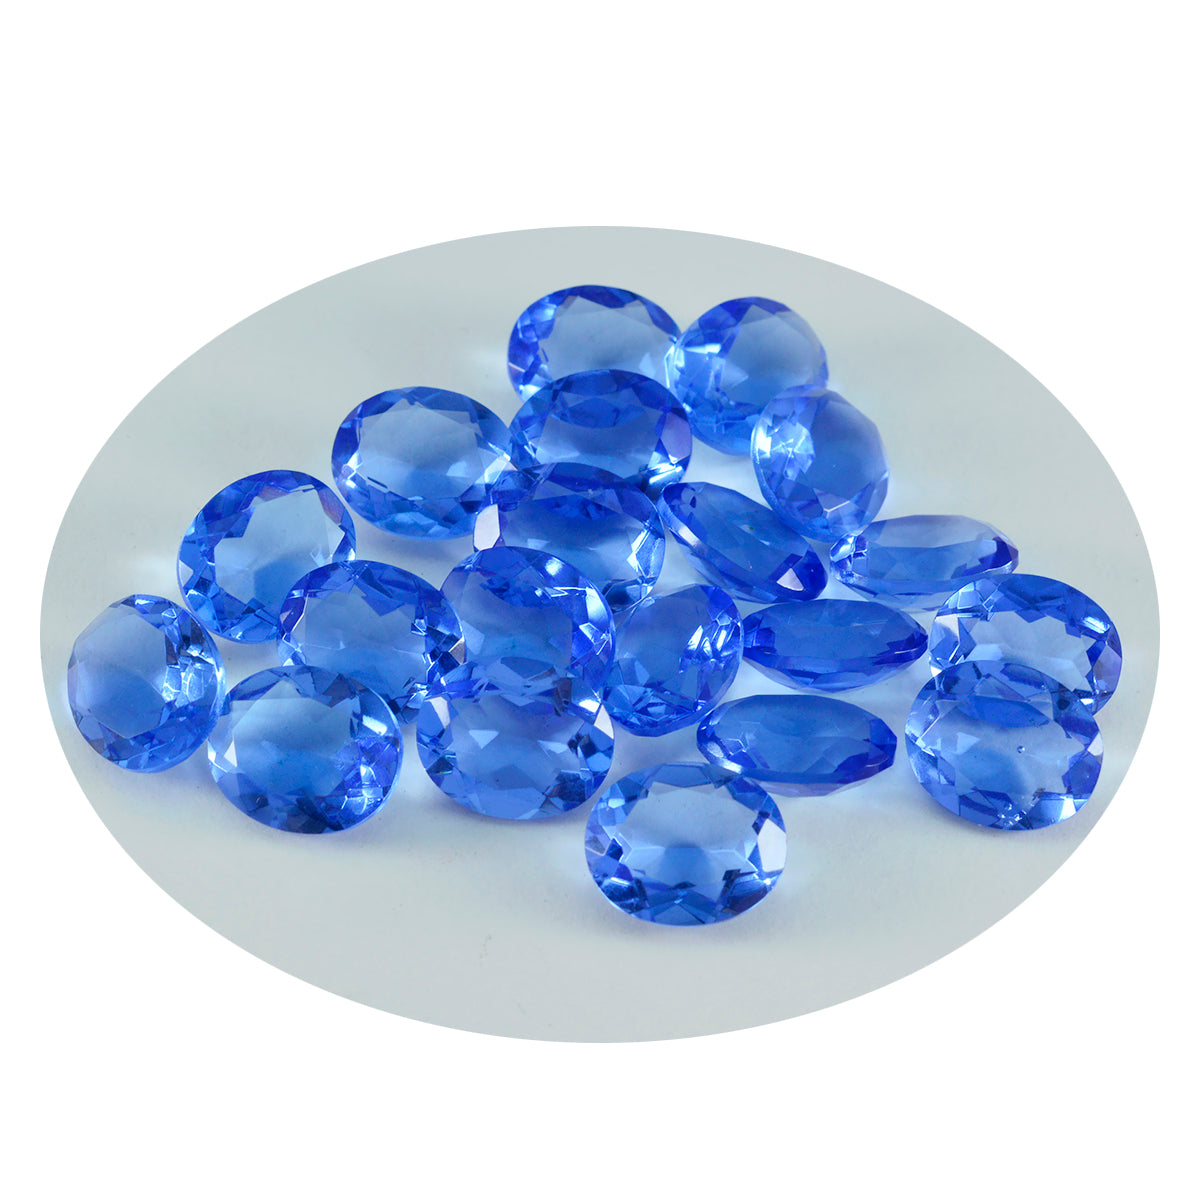 Riyogems 1PC Blue Sapphire CZ Faceted 5x7 mm Oval Shape A+ Quality Loose Gemstone